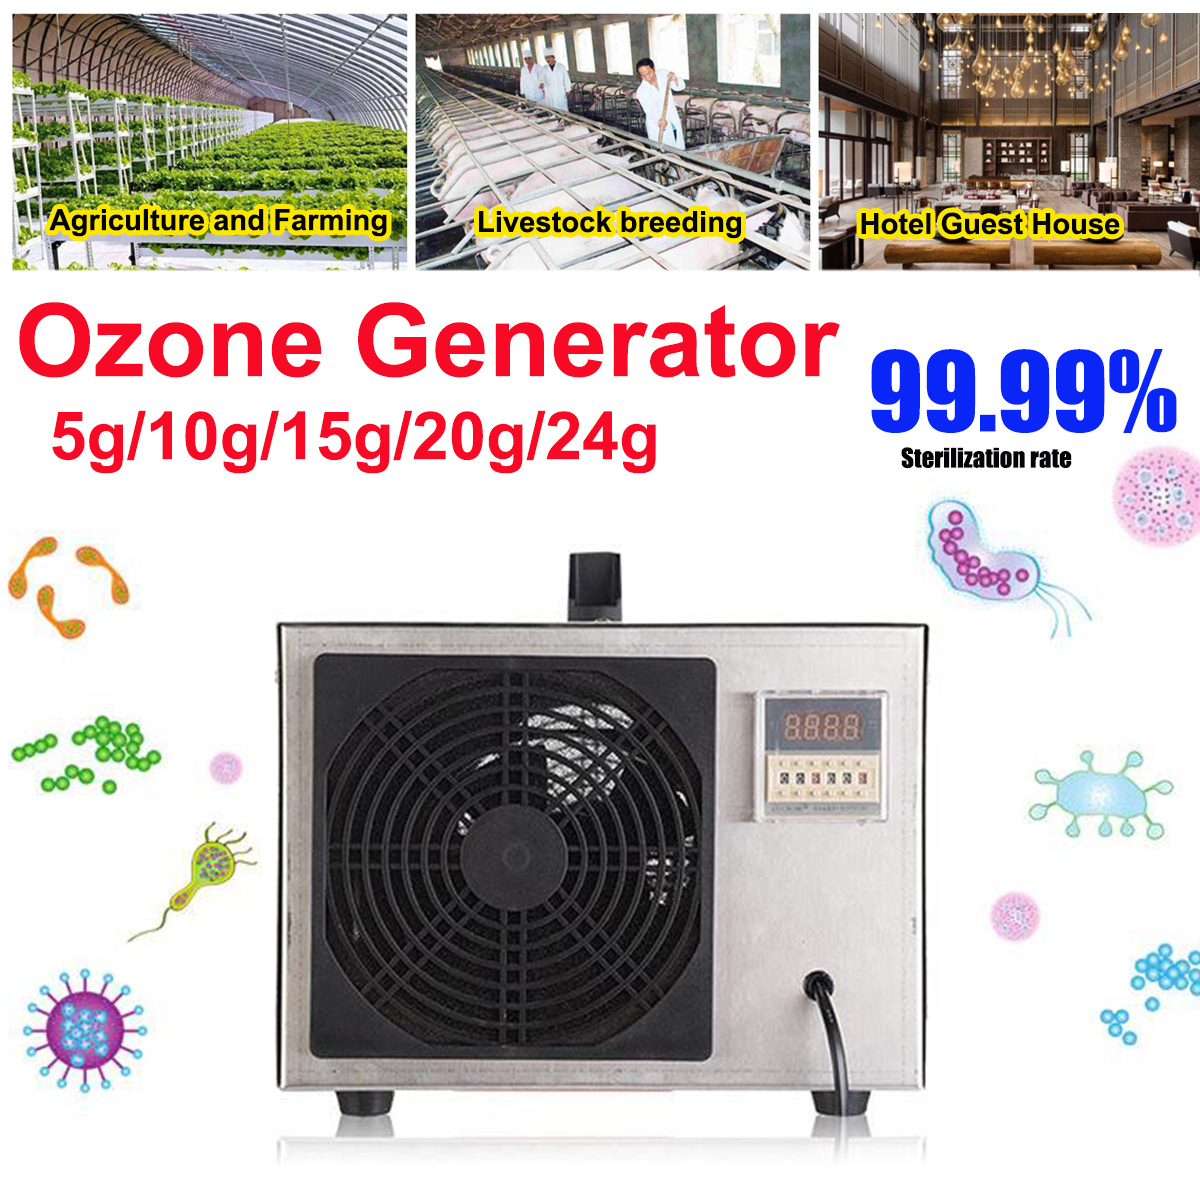 5g/10g/15g/20g/24g Ozone Generator Sterilization Machine Ozone Deodorization Ammonia Removal for Farm Pasture